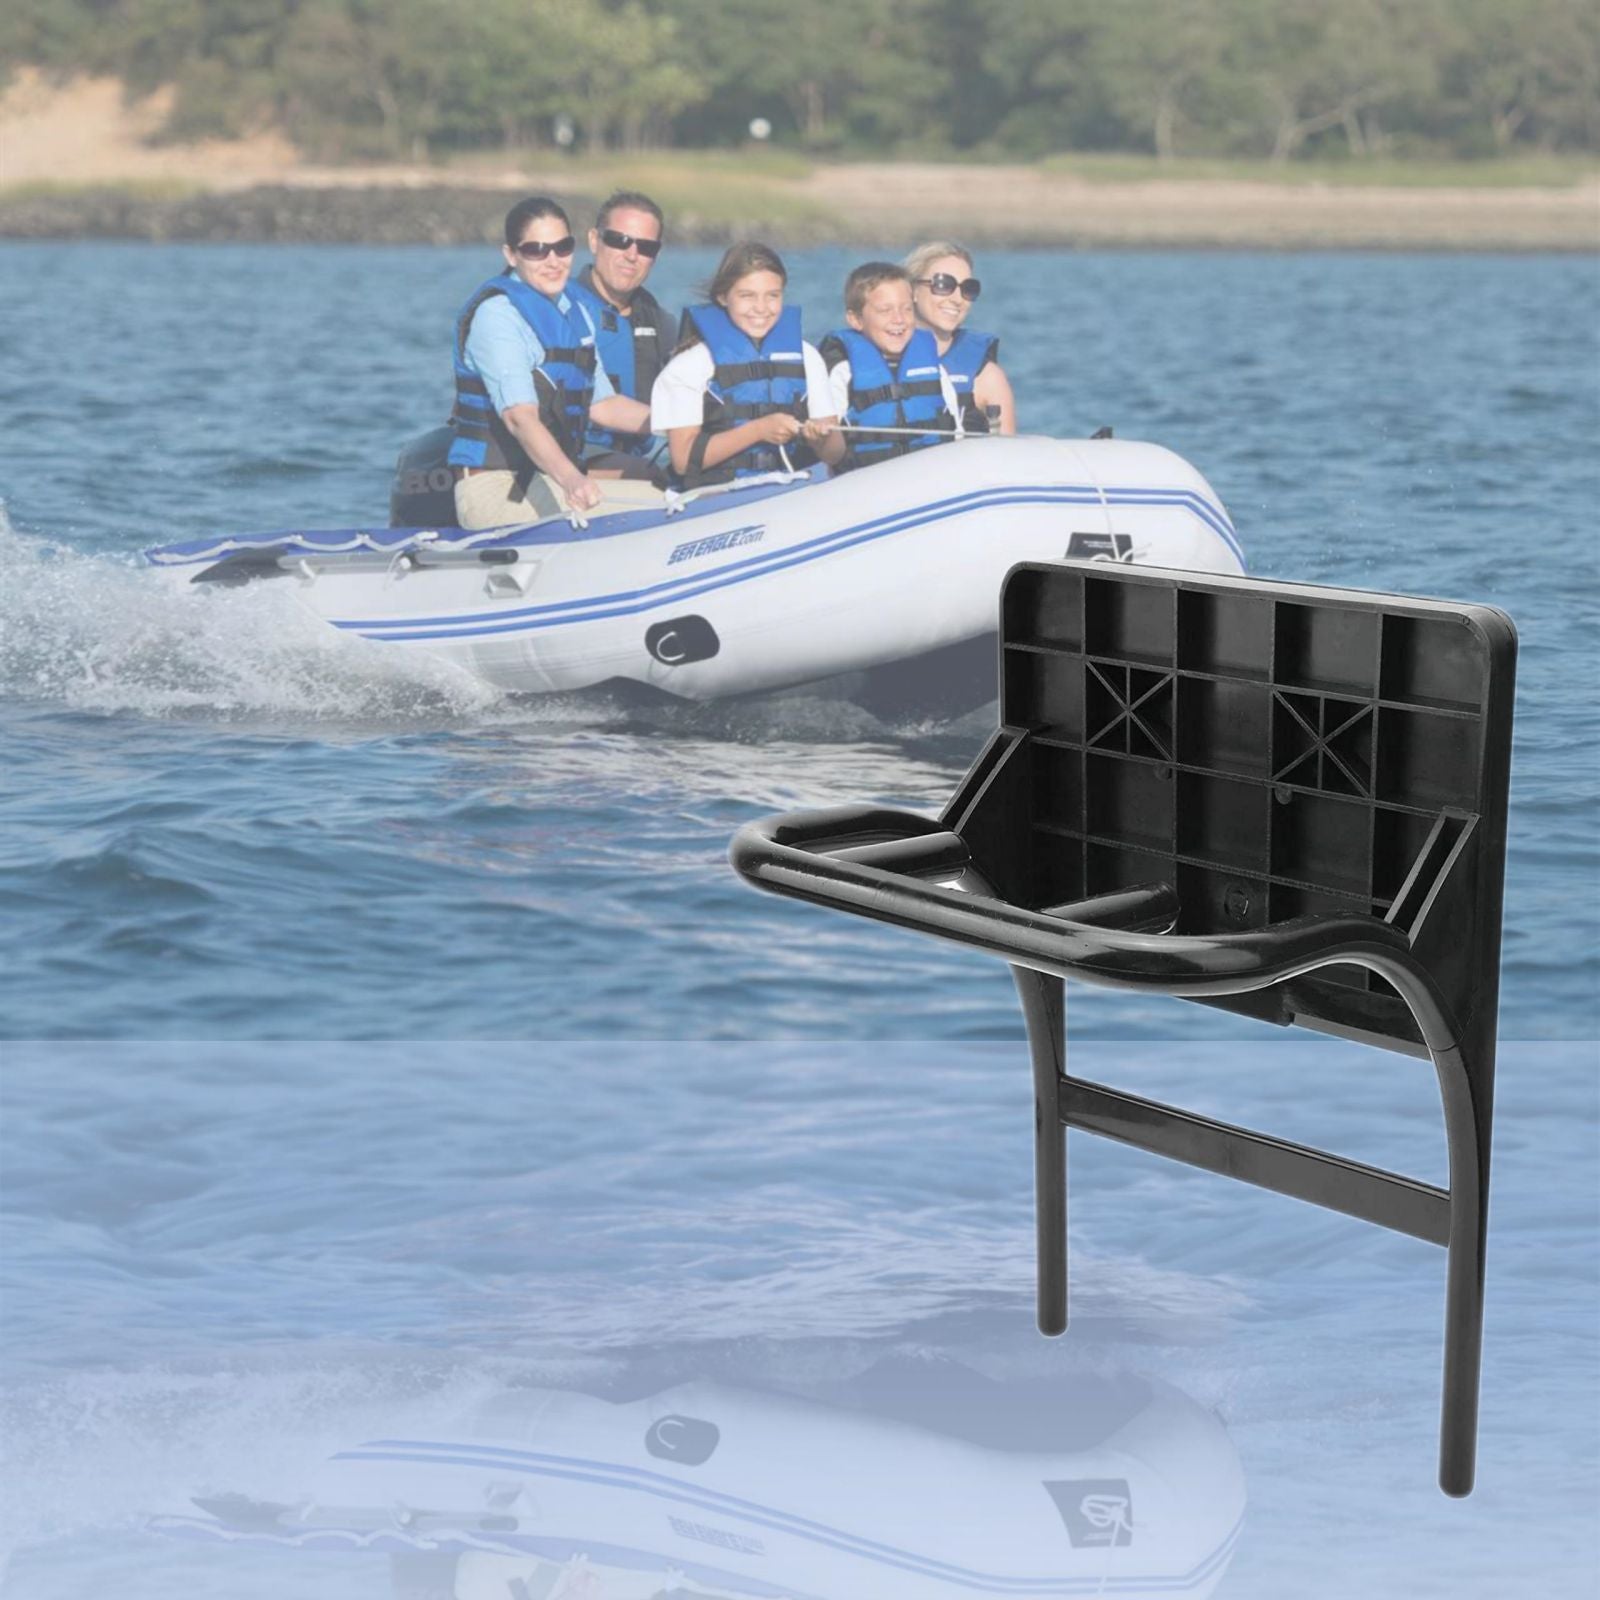 Solar Marine 2.3M/3.0M/3.6M Inflatable Boat + Motor Mount 2in1 Set